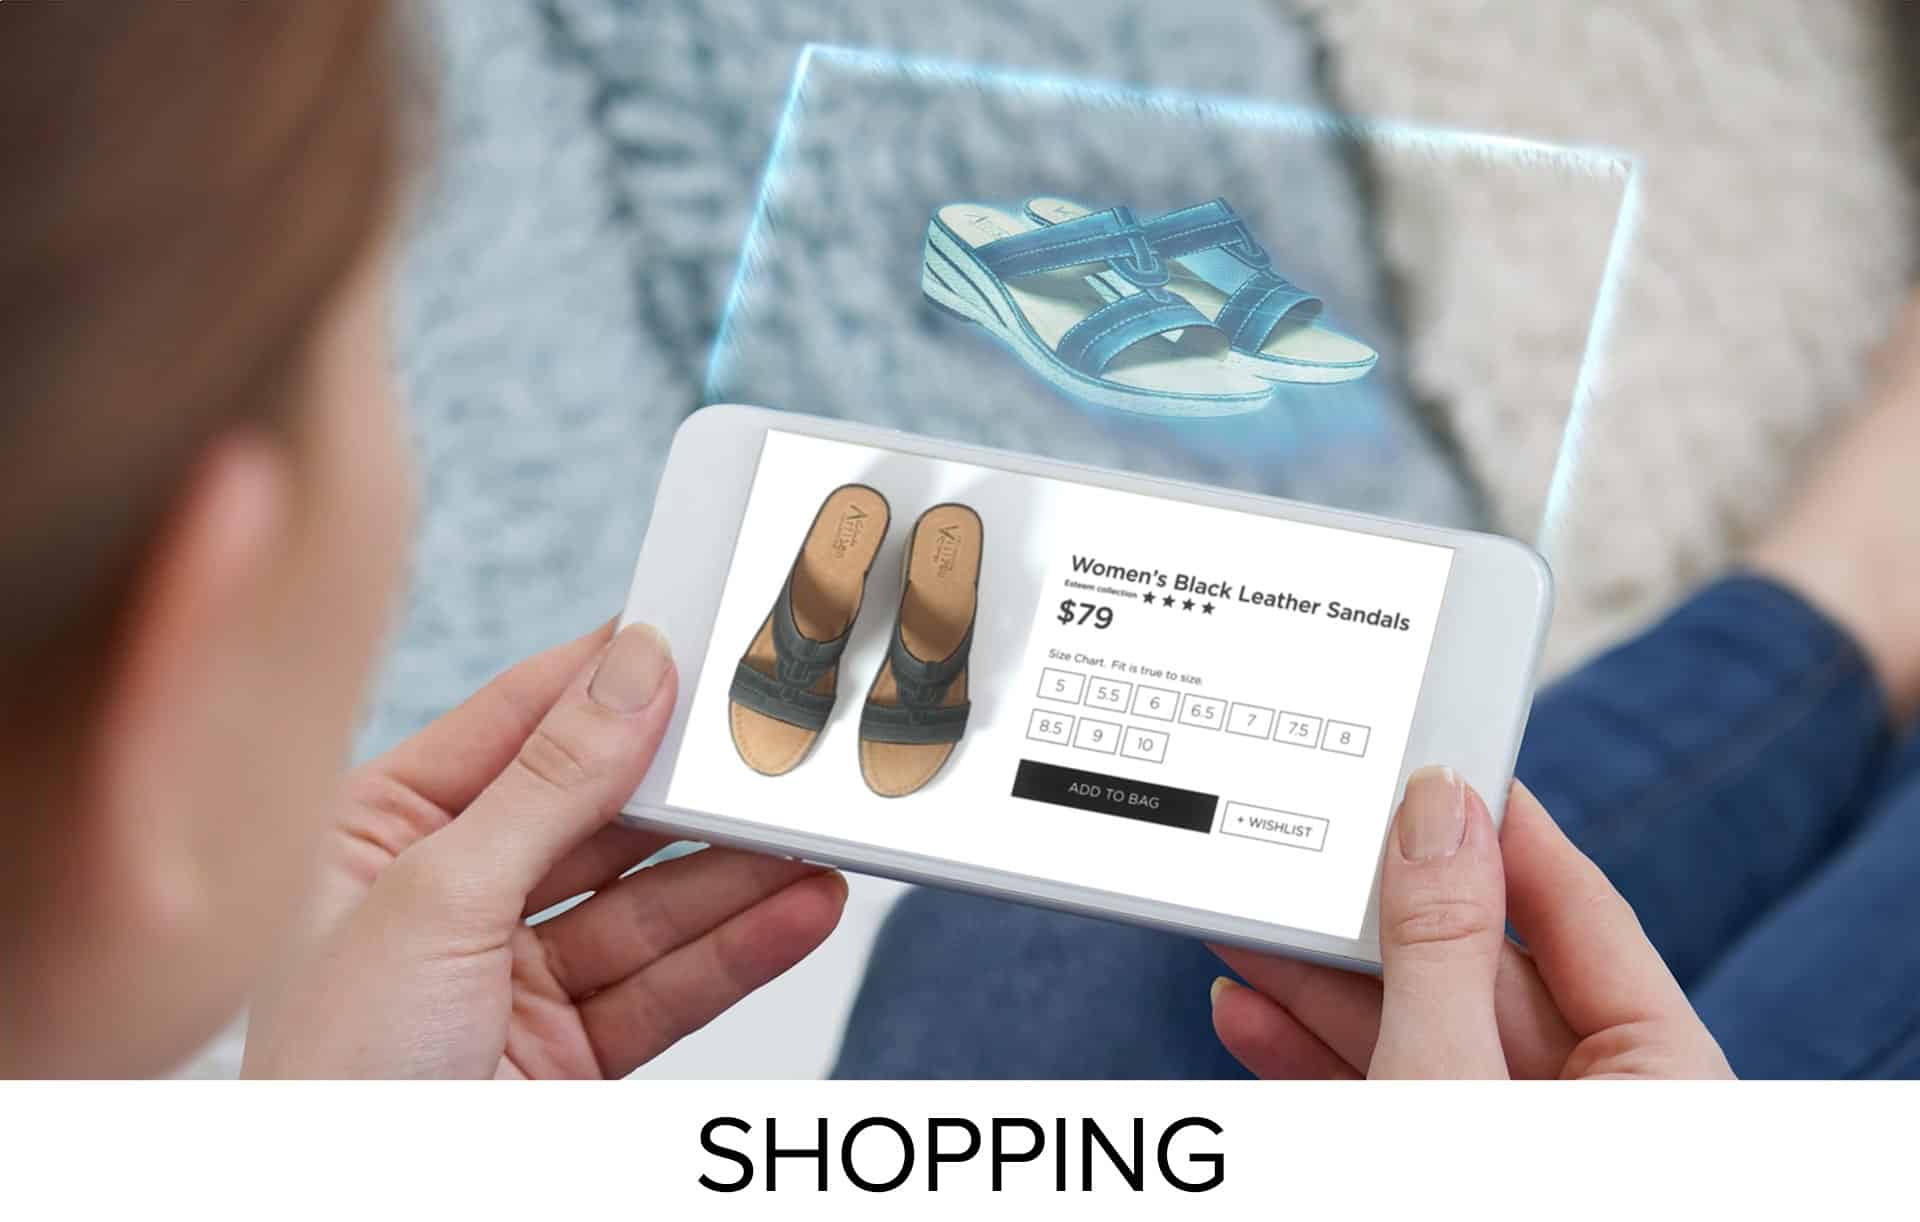 Online Shopping Hologram using IKIN's RYZ technology